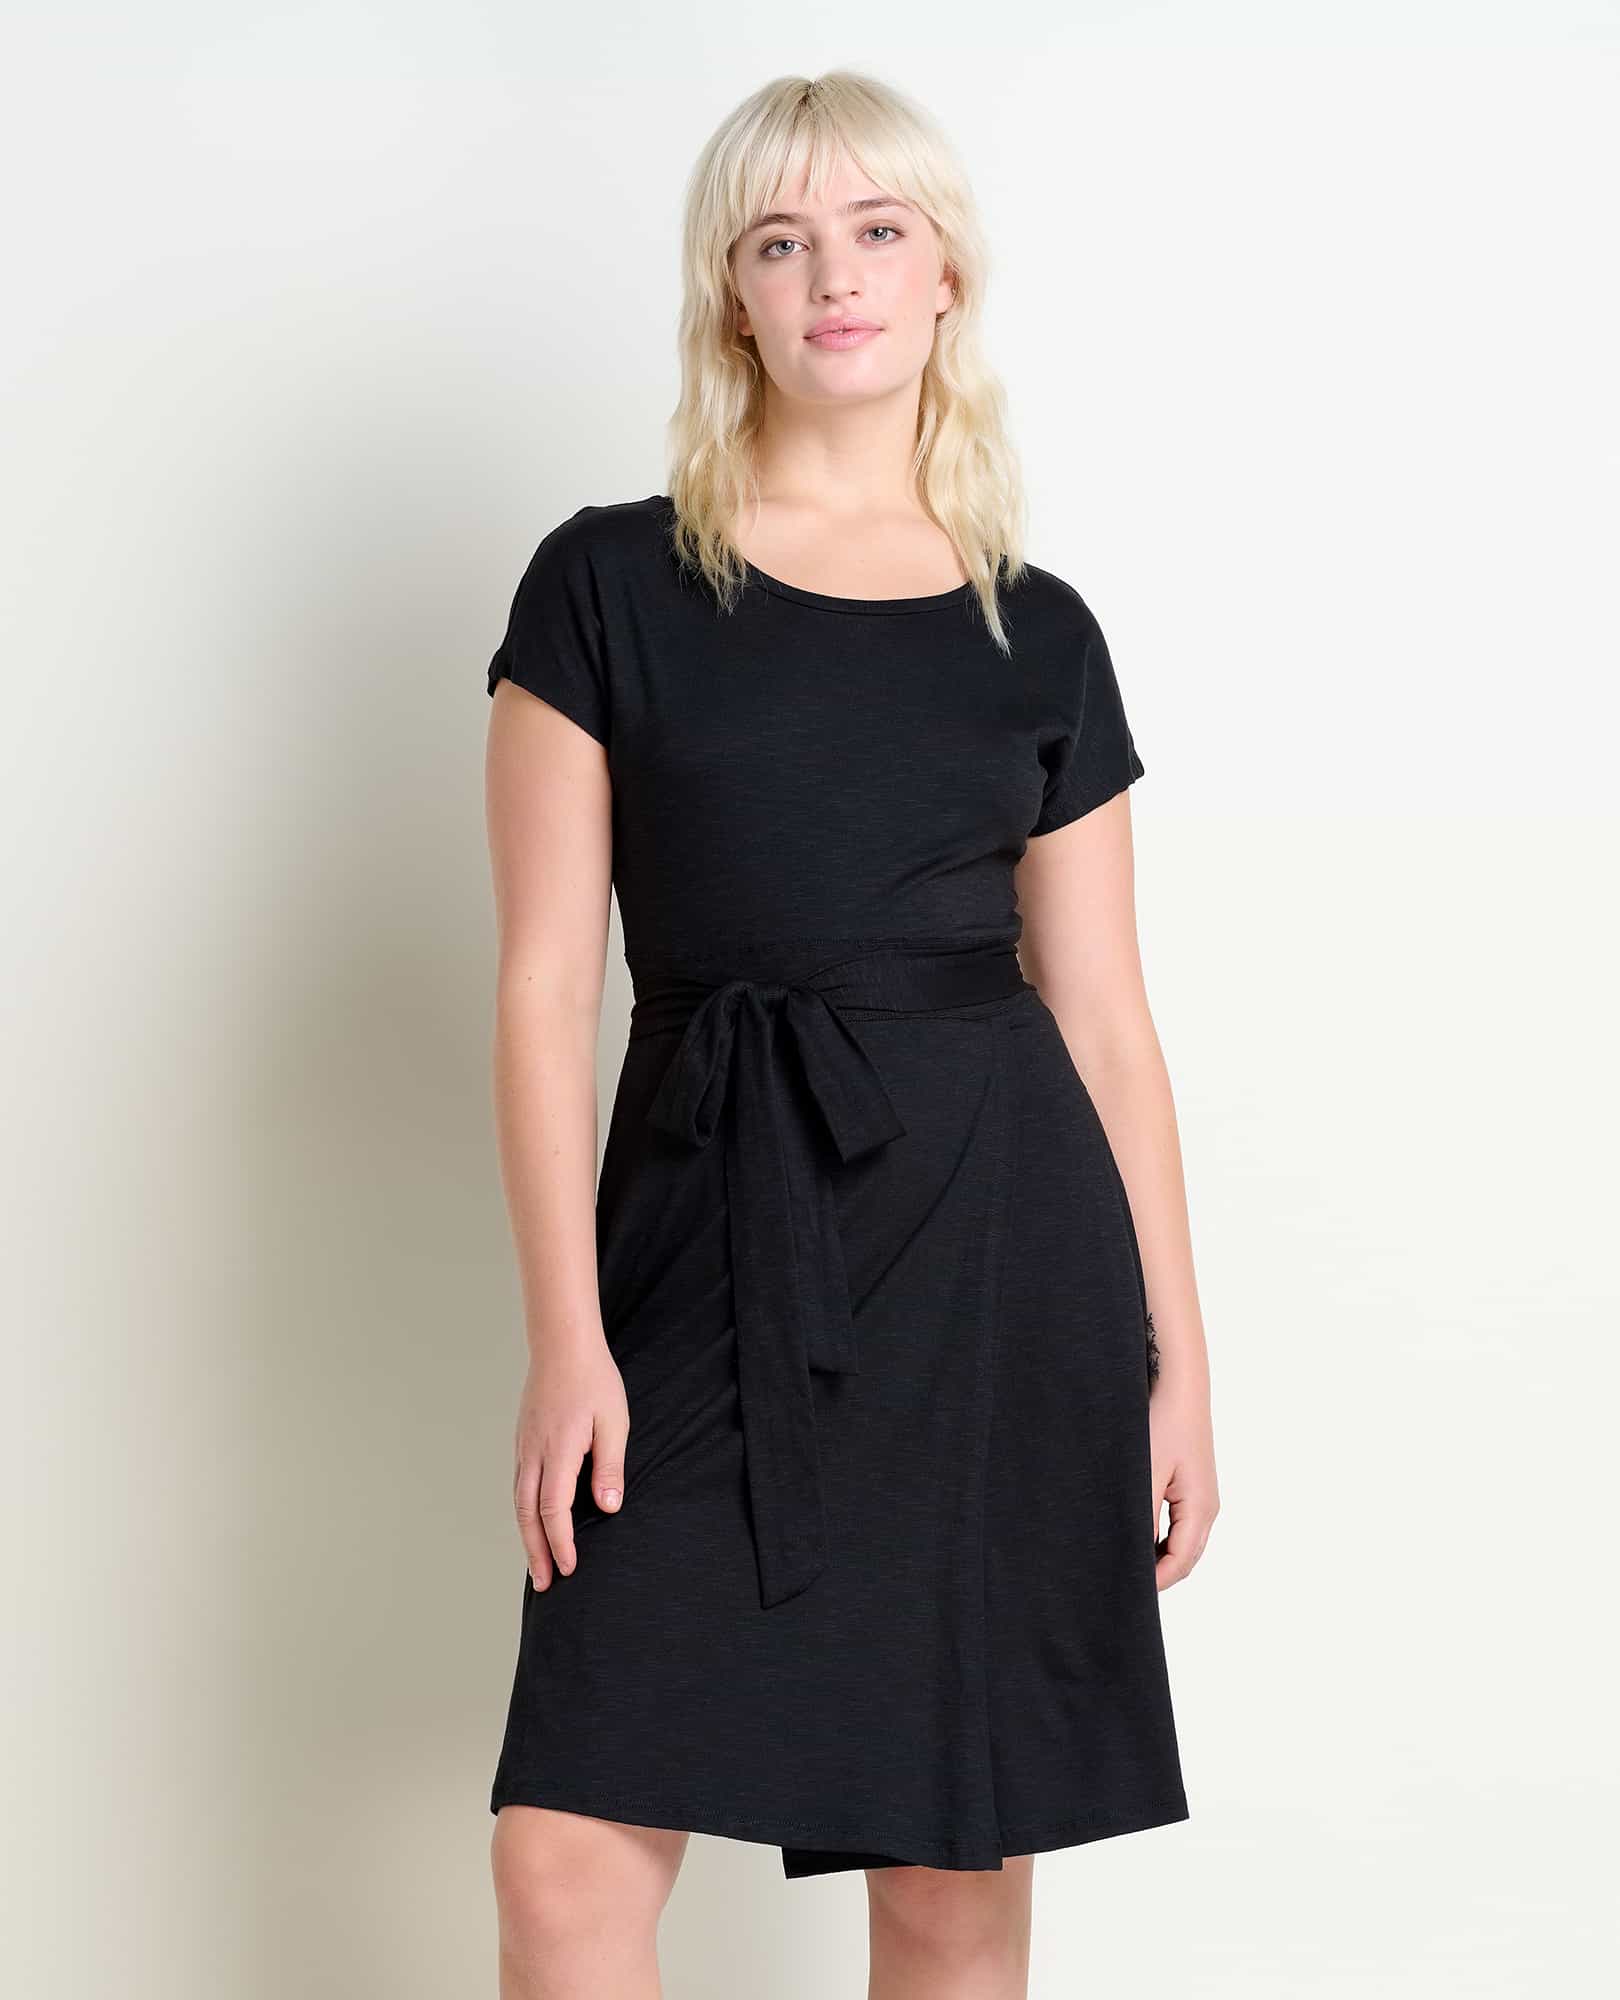 Attractive XL Fashion Woman Model in Sleeveless Black Dress · Free Stock  Photo